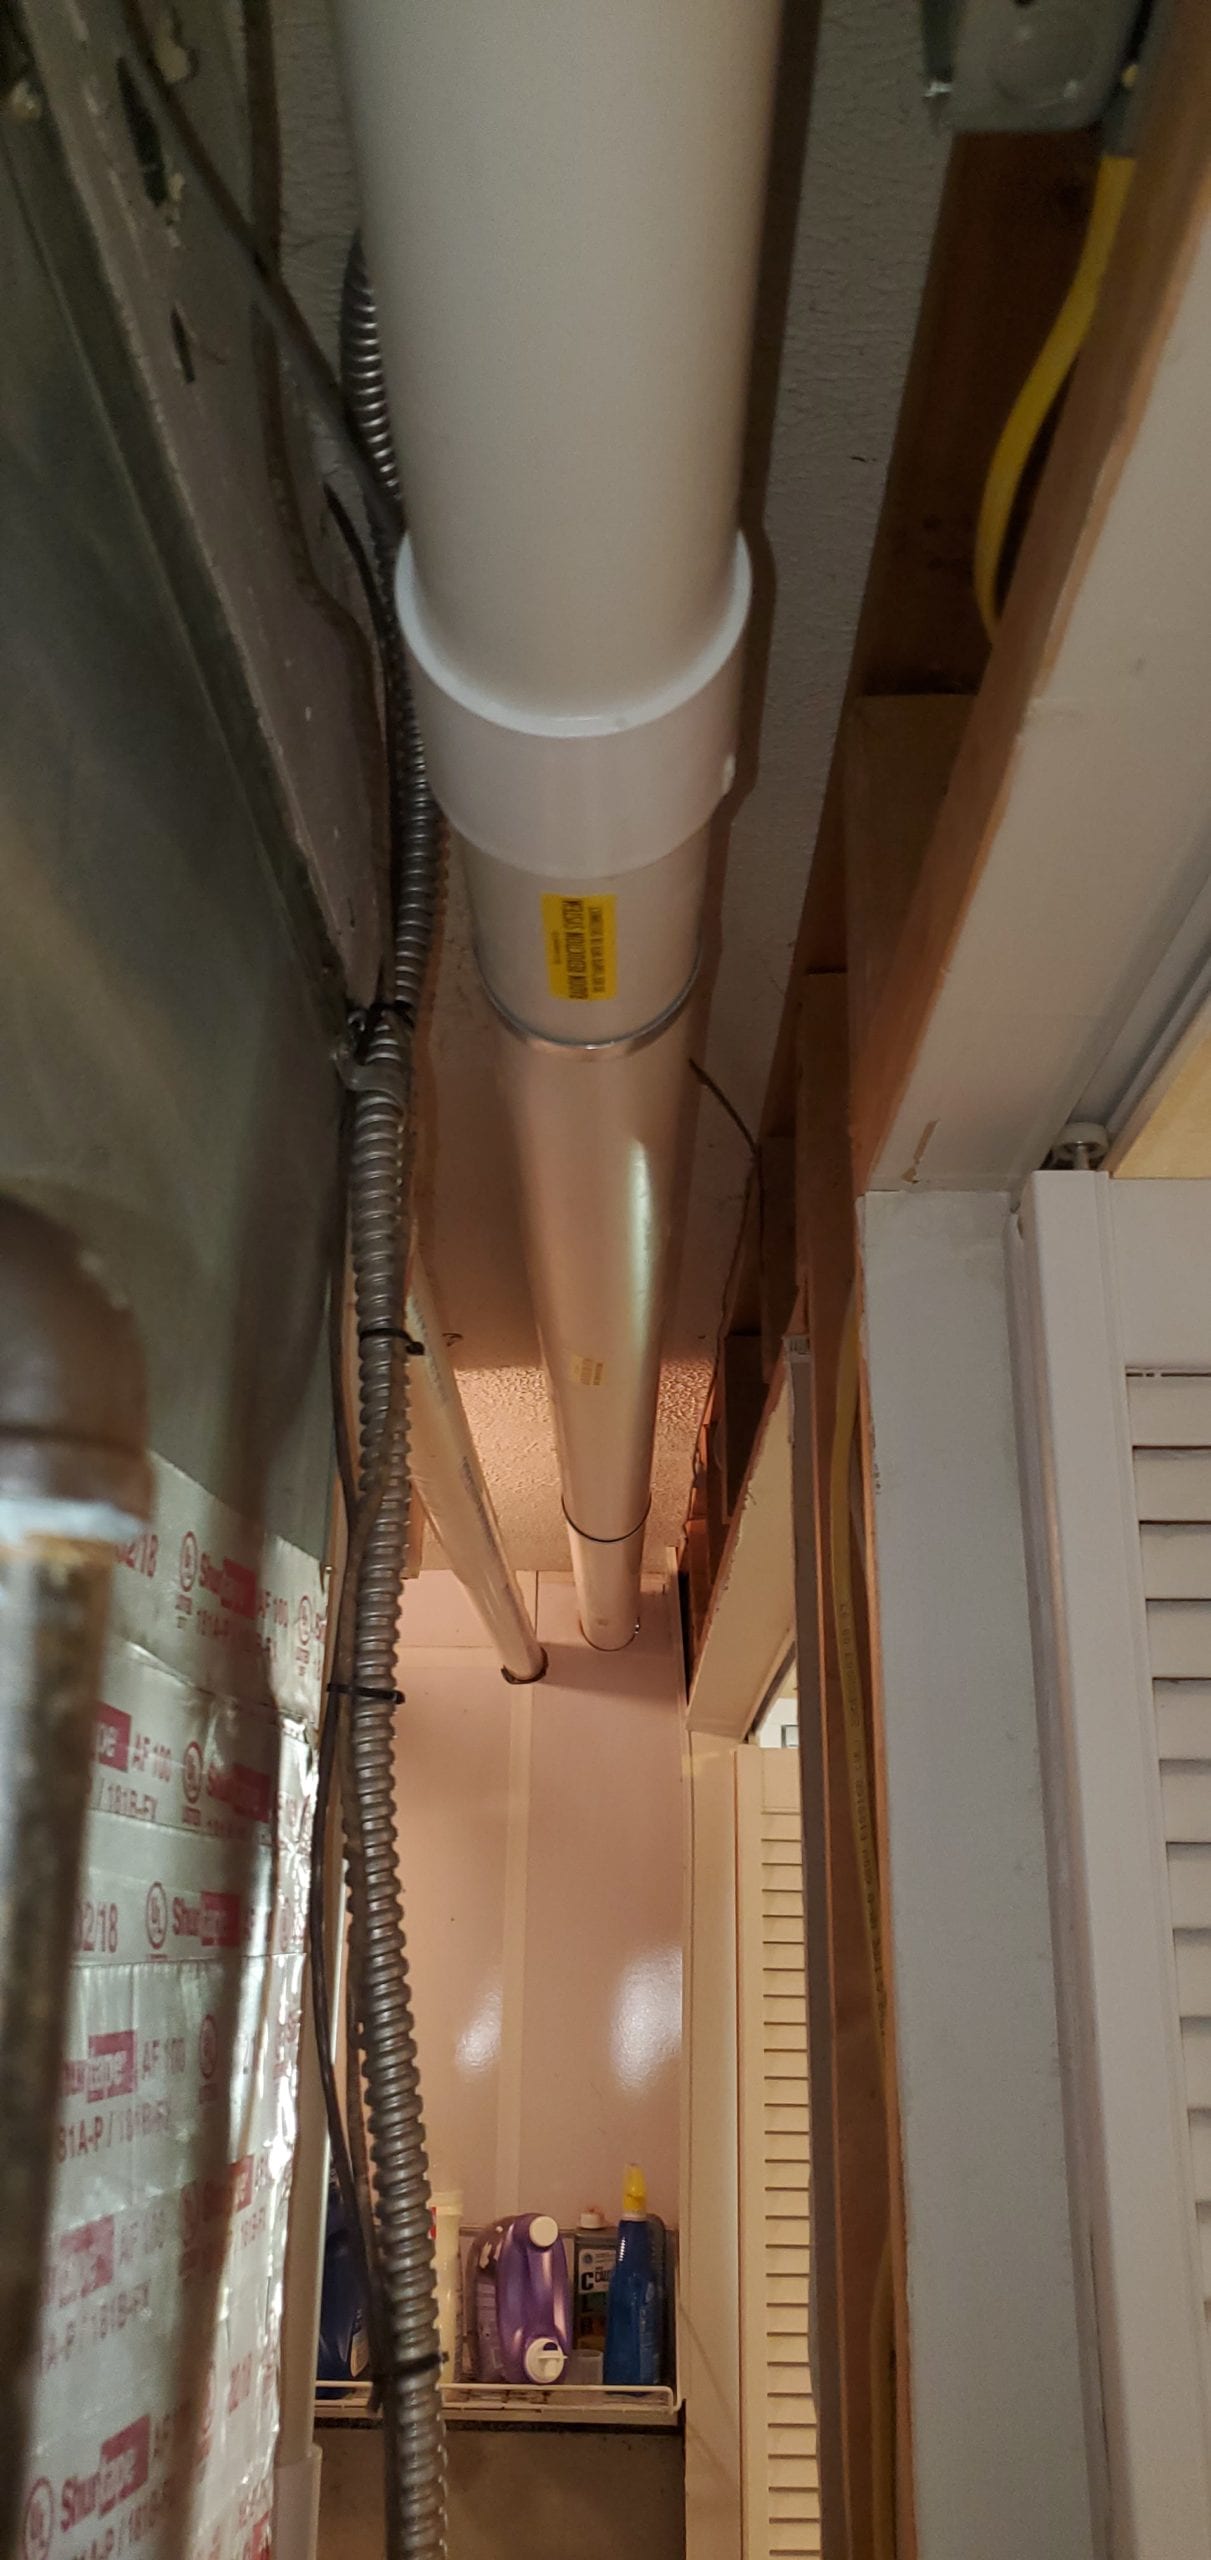 Interior Radon Duct pipe Mitigation system